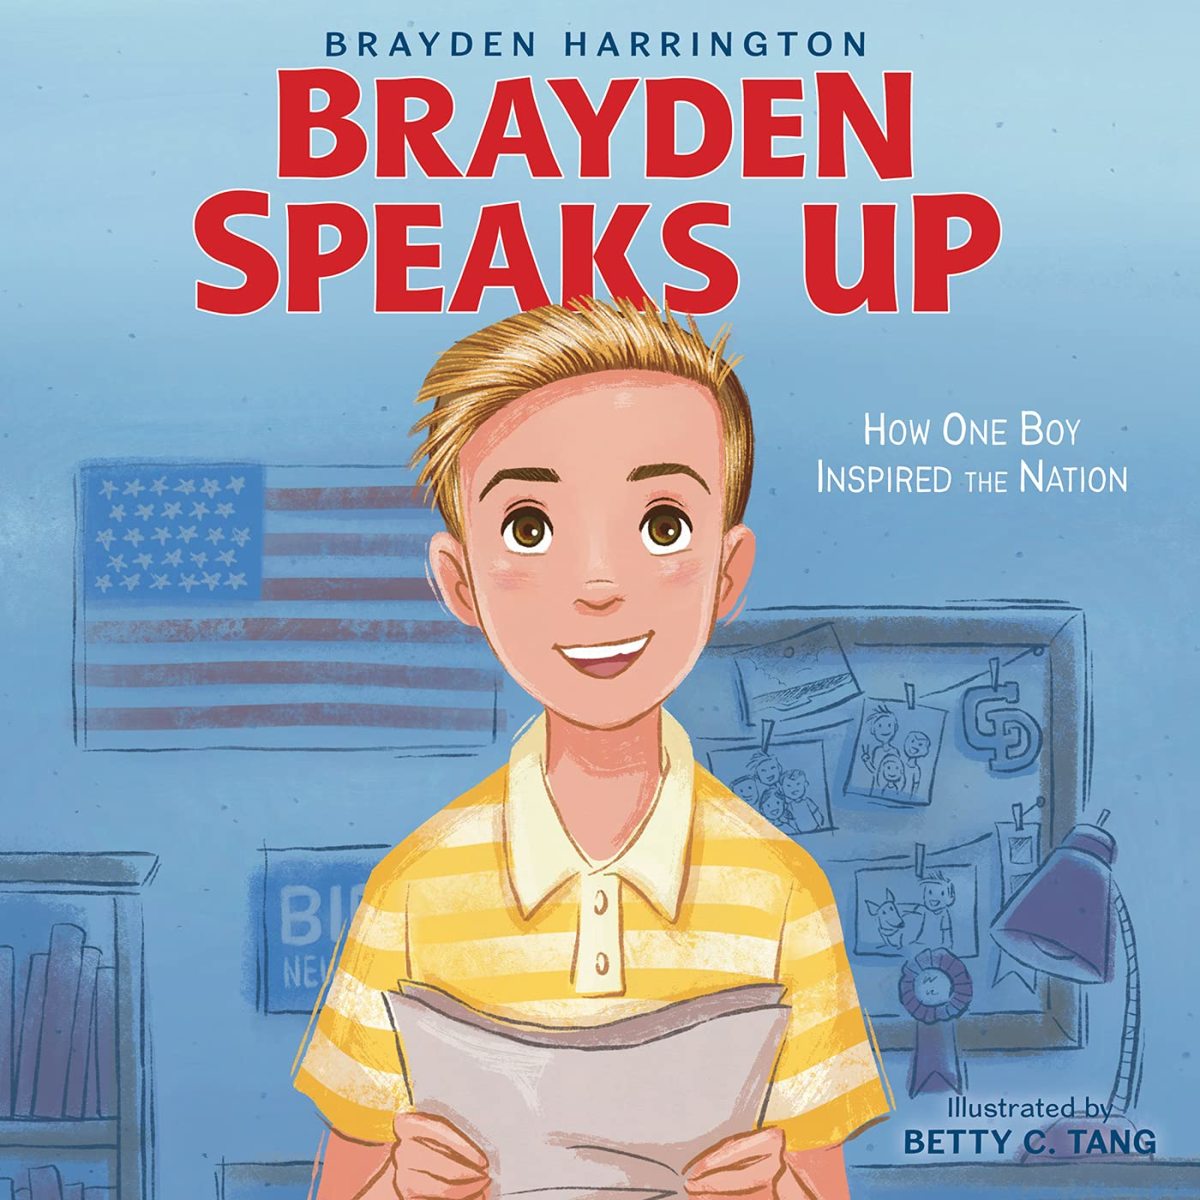 Brayden Speaks Up: How One Boy Inspired the Nation by Brayden Harrington